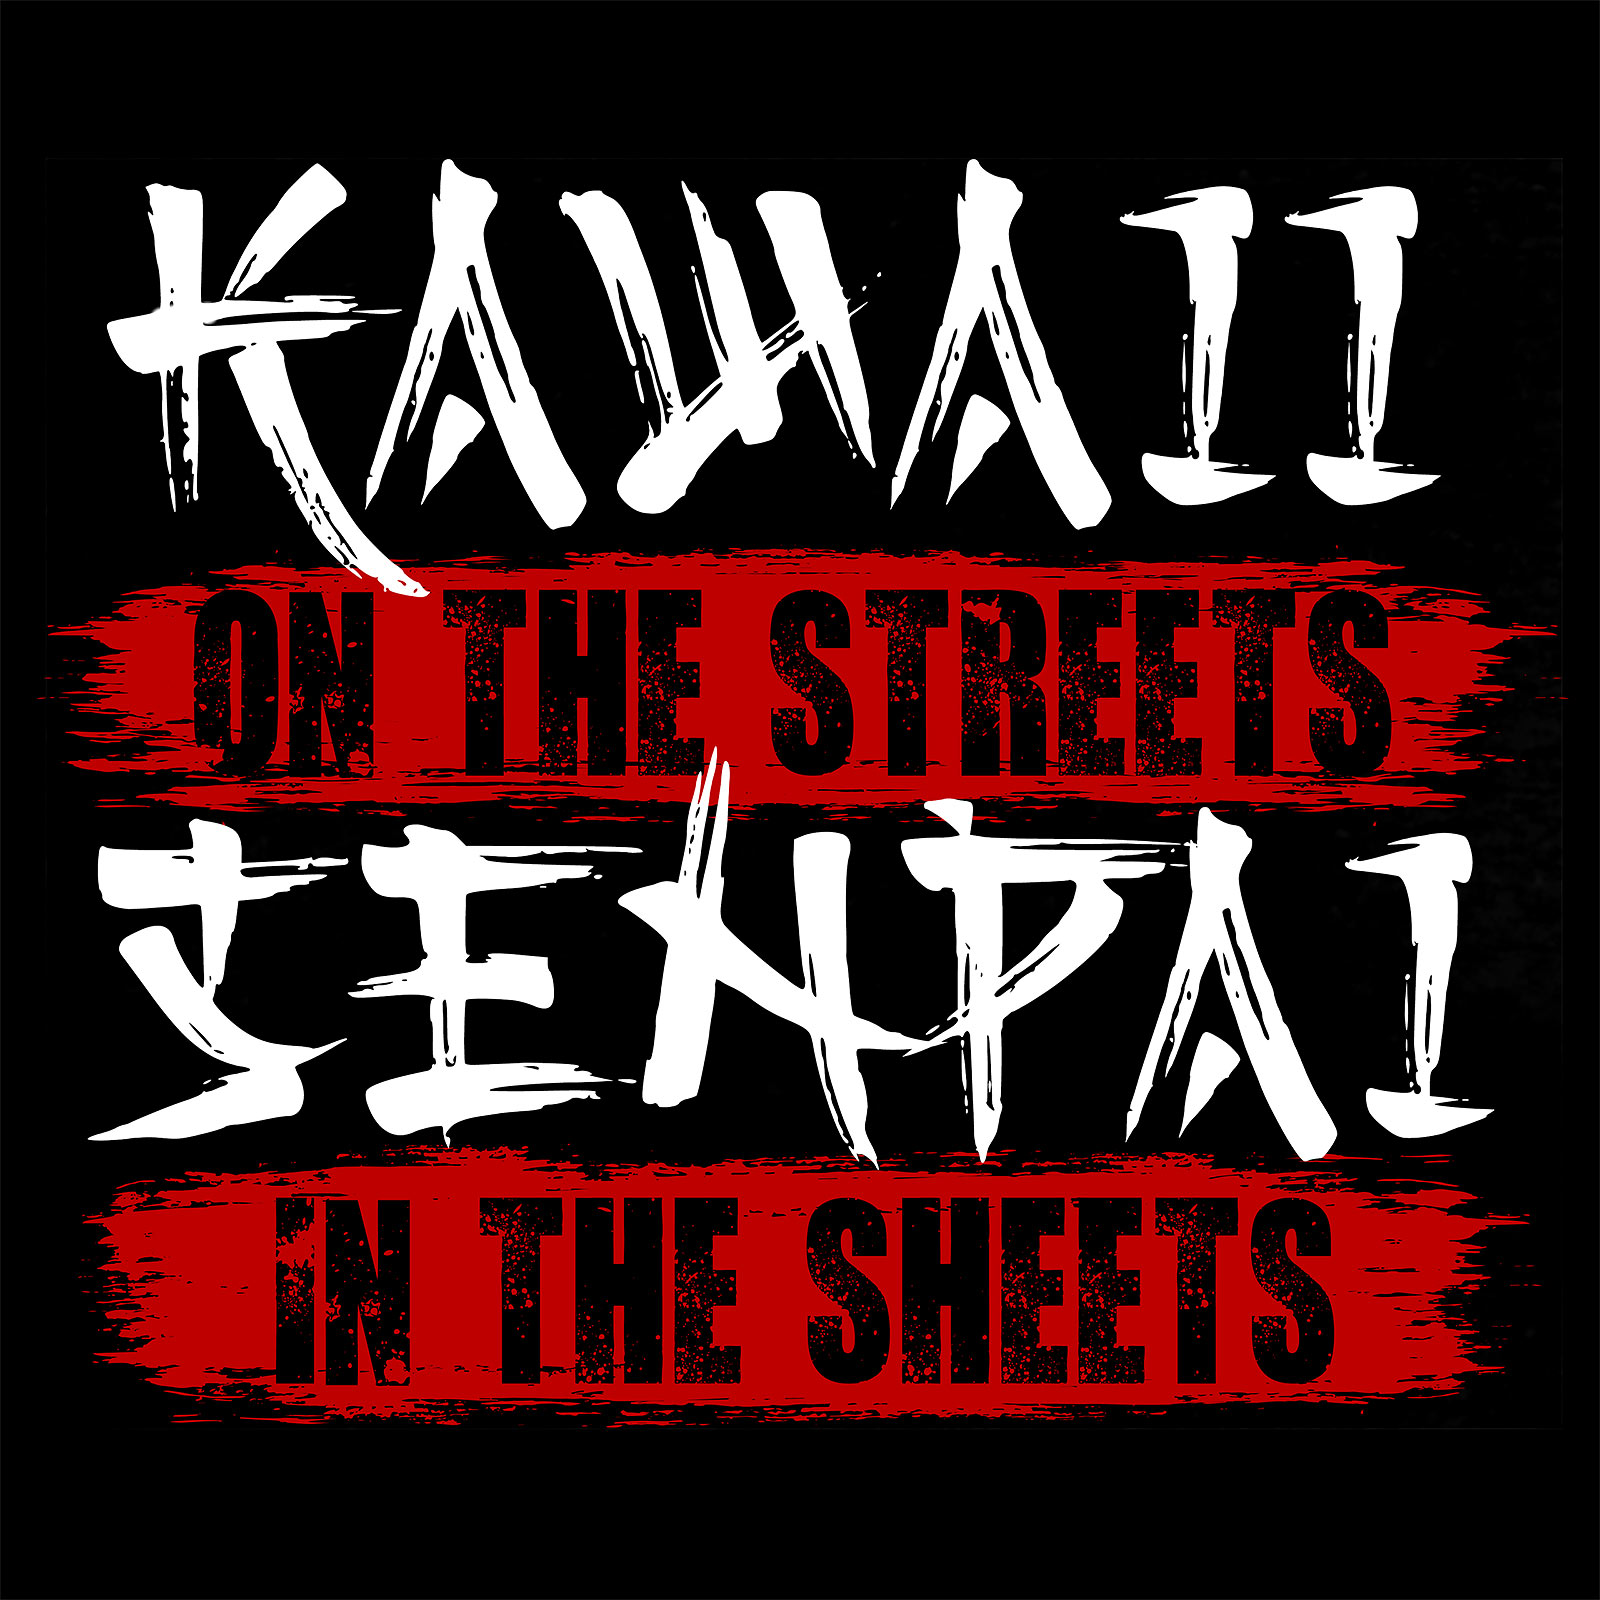 Kawaii & Senpai T-Shirt for Anime Fans Black